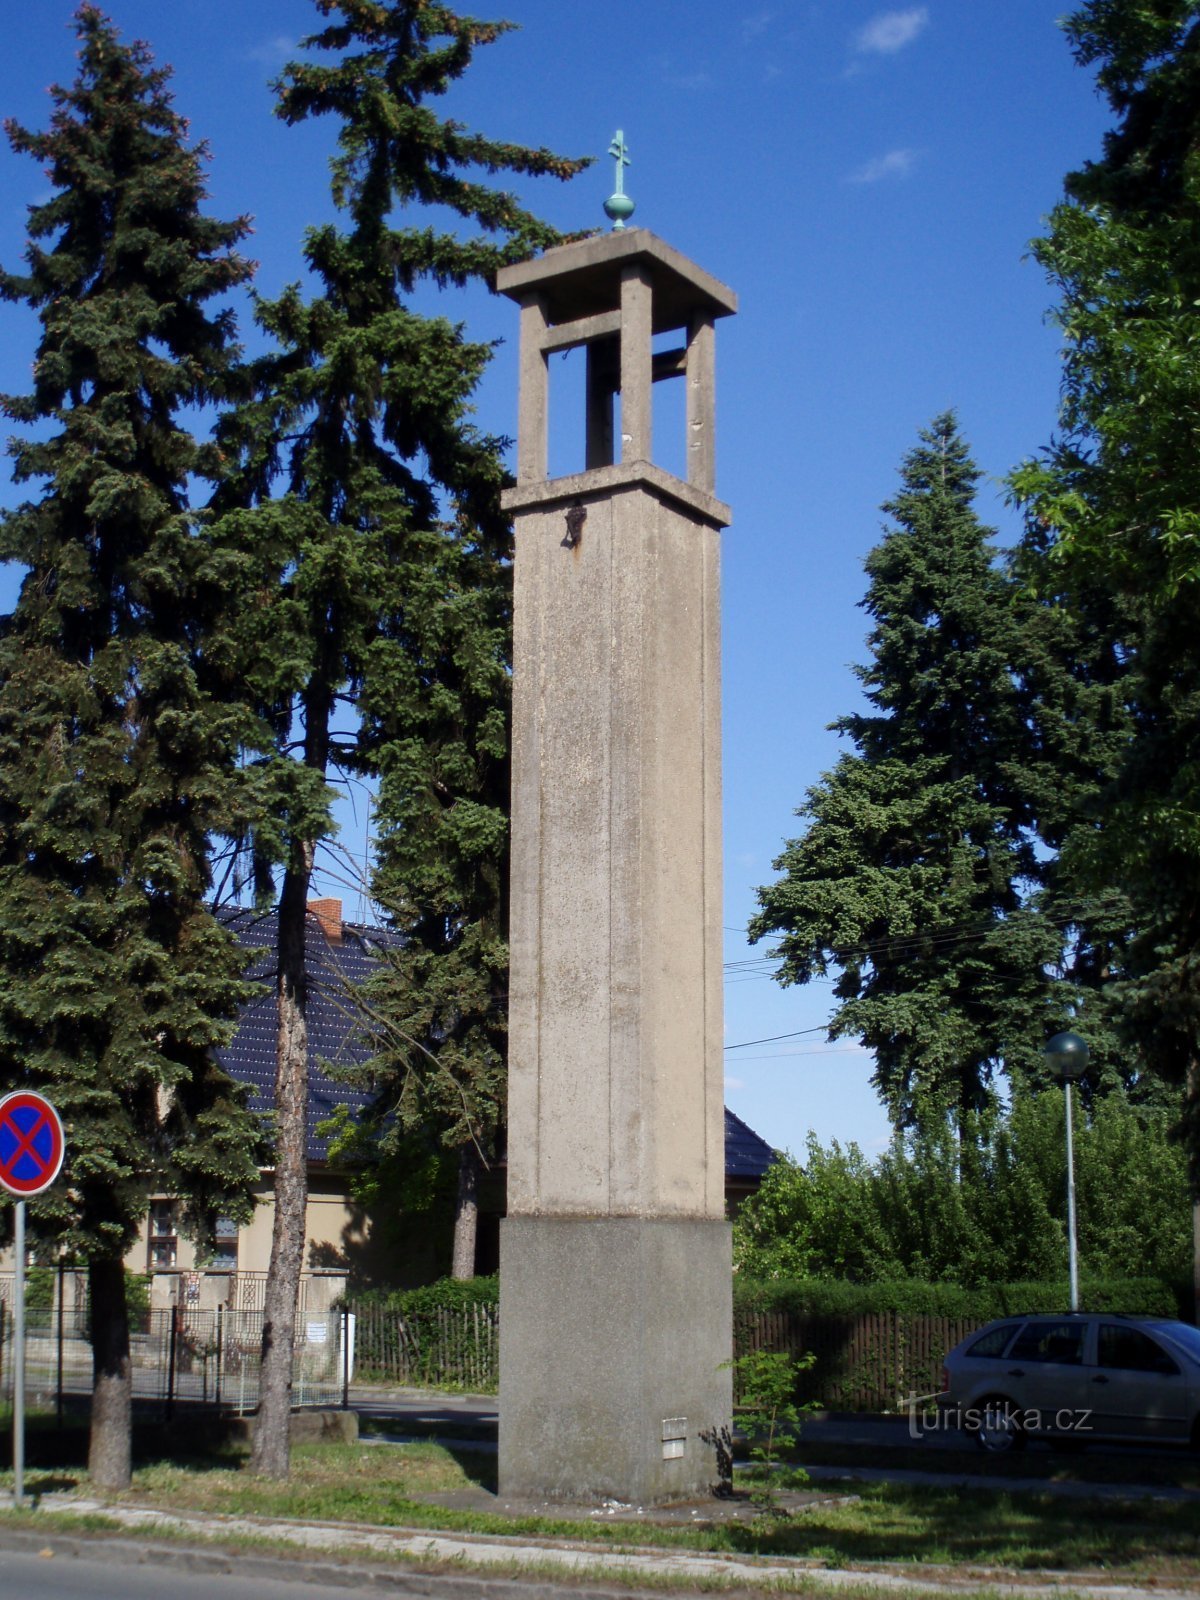 Pouchov 的钟楼 (Hradec Králové, 13.5.2009/XNUMX/XNUMX)